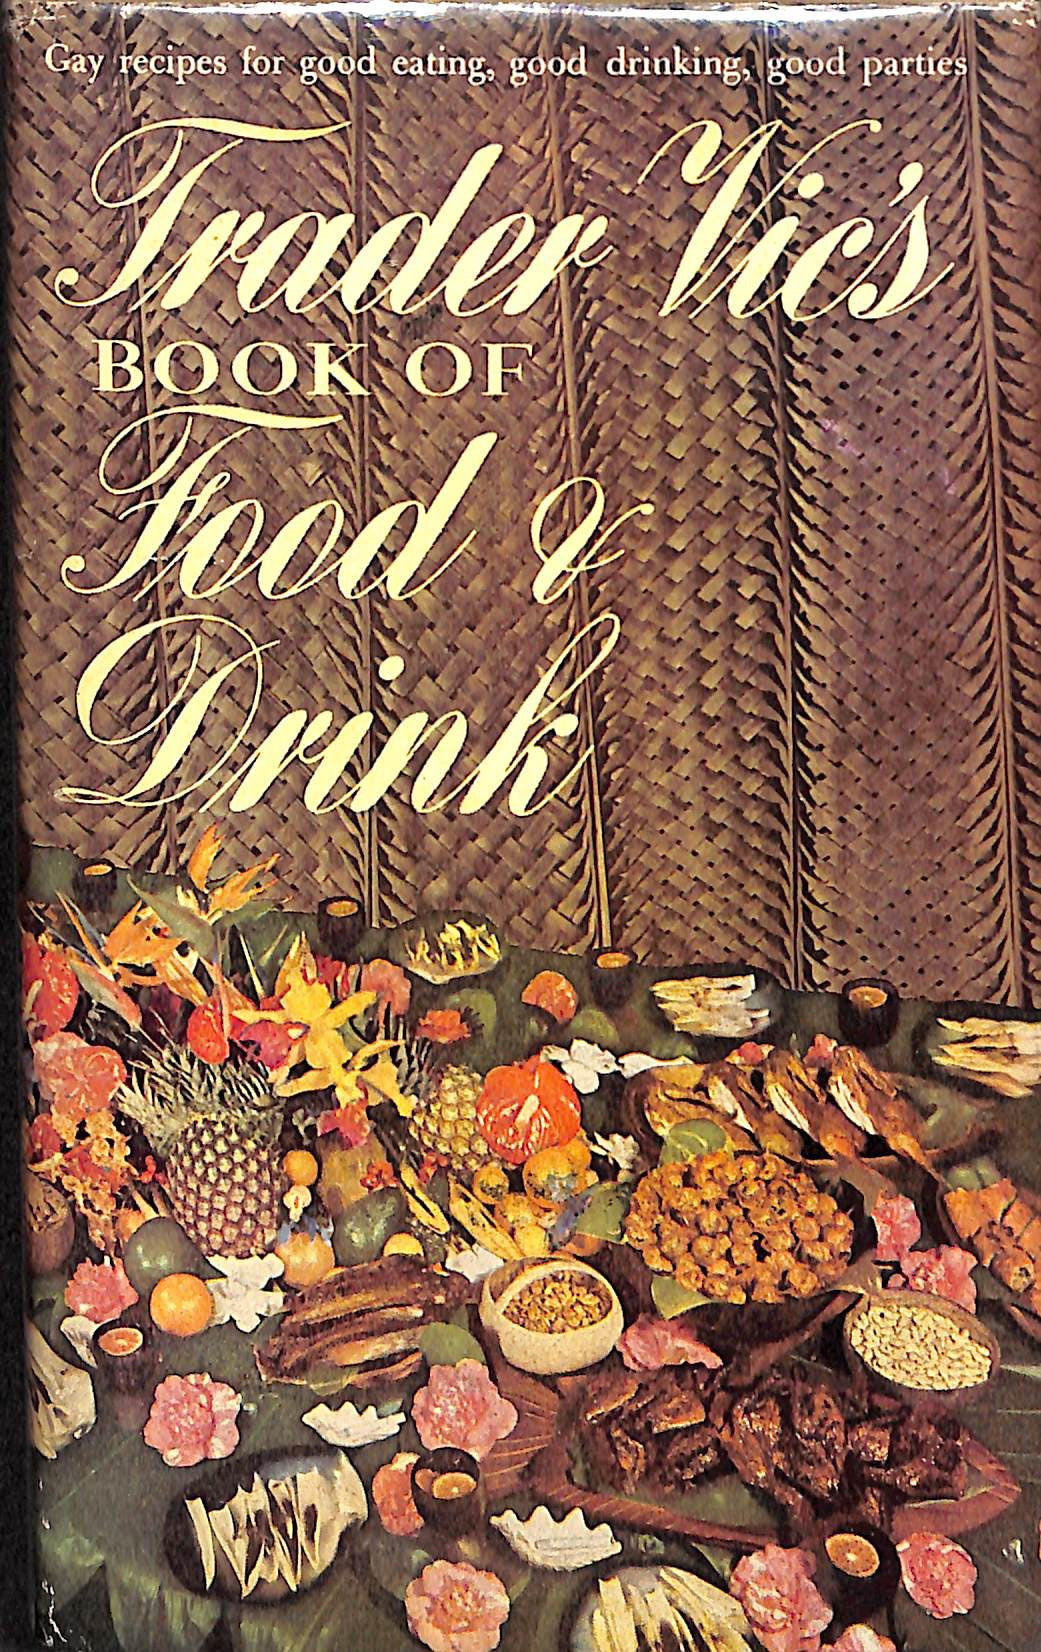 "Trader Vic's Book of Food & Drink" VIC, Trader (SOLD)